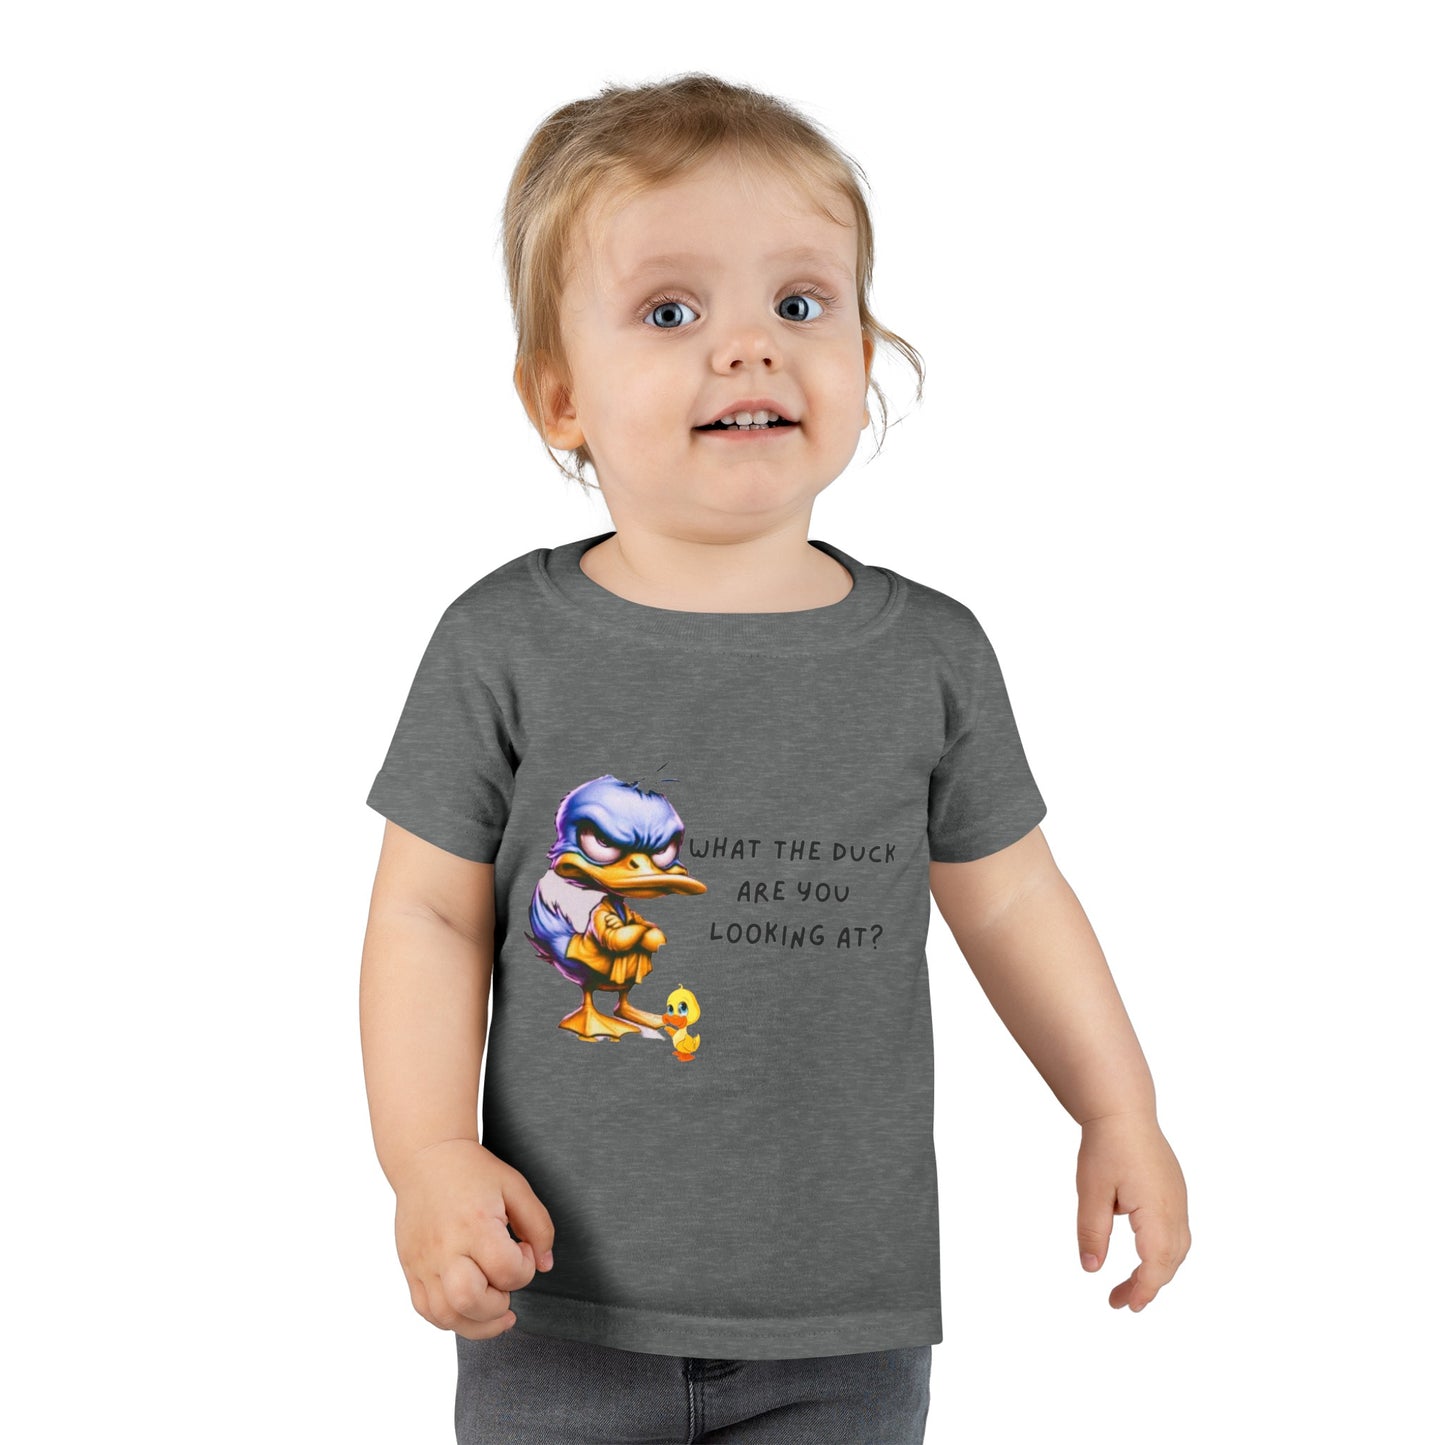 Toddler T-shirt